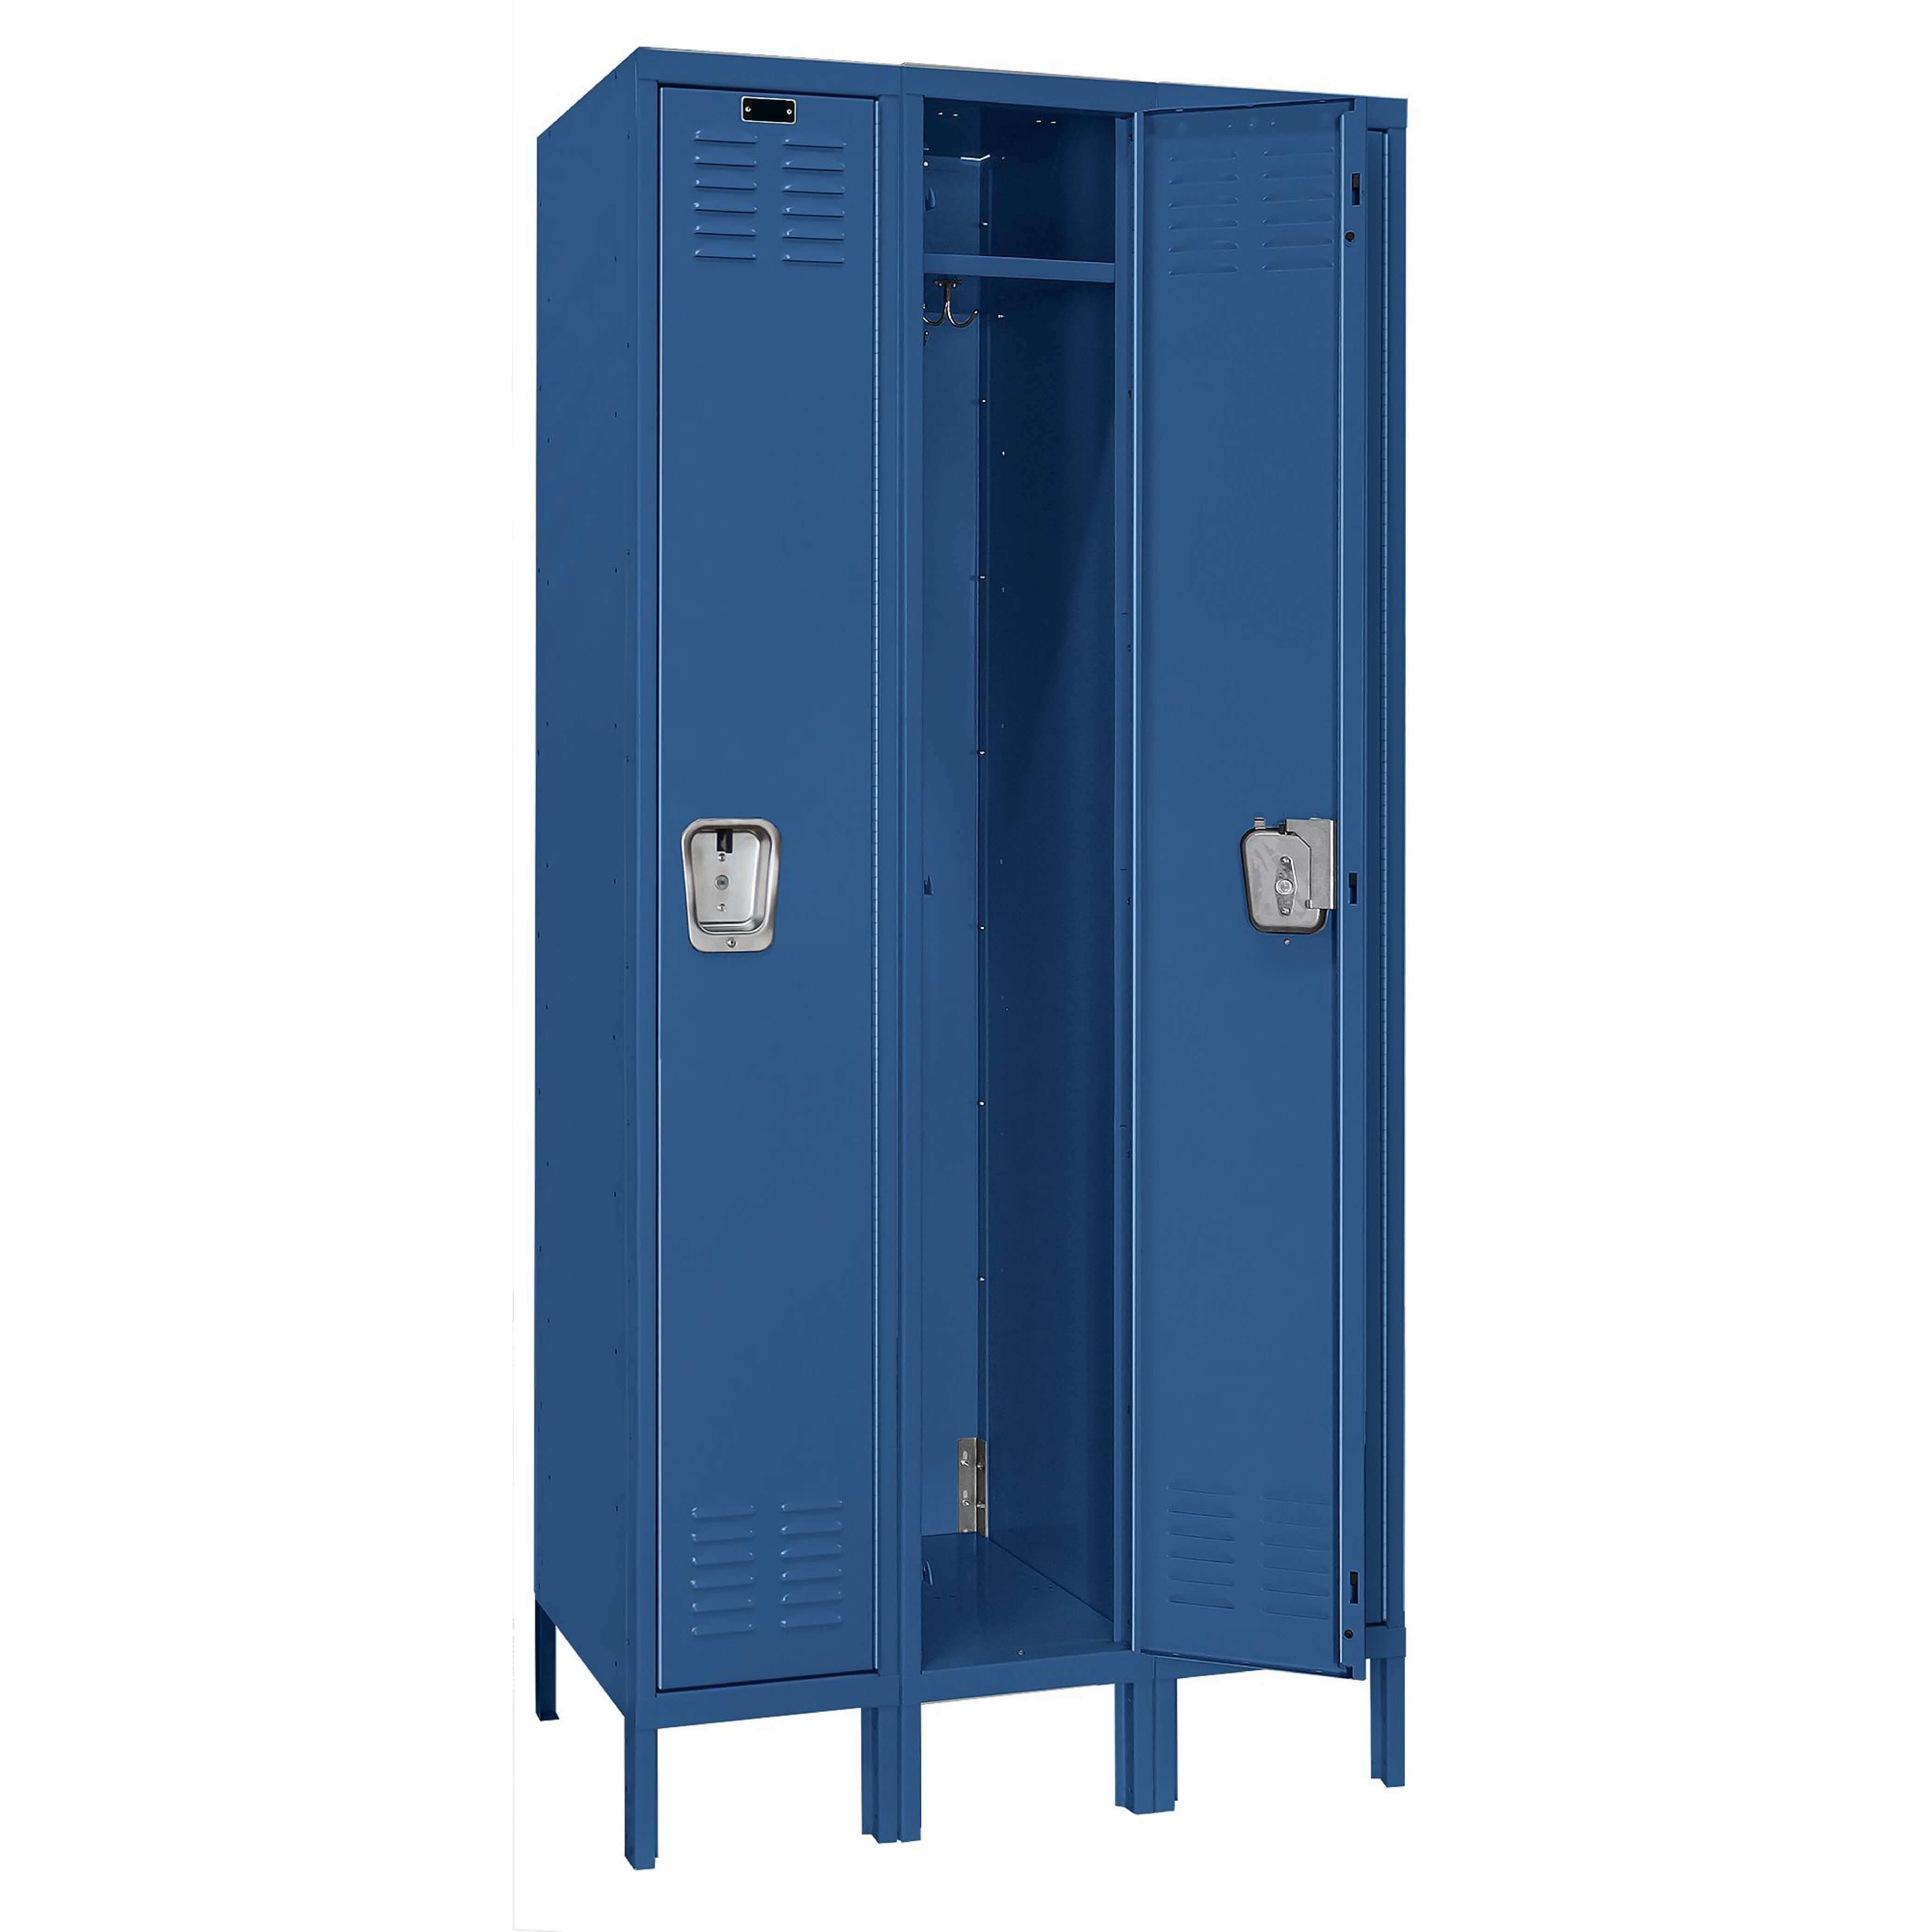 Employee lockers metal lockers patriot series wardrobe lockers 3w 1t marine blue open angle view 0